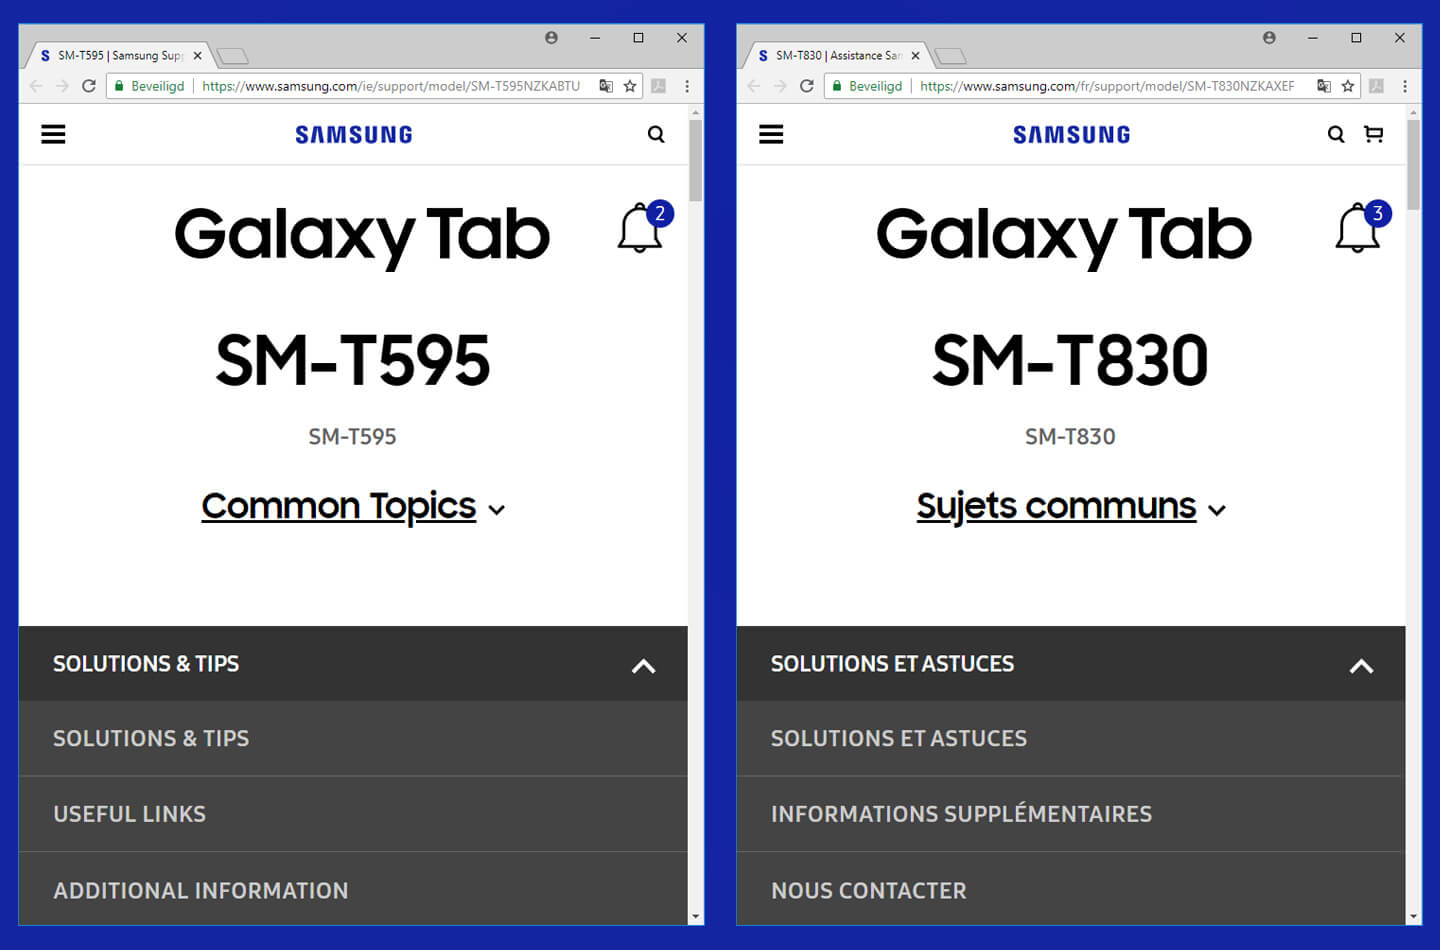 Samsung tablet support